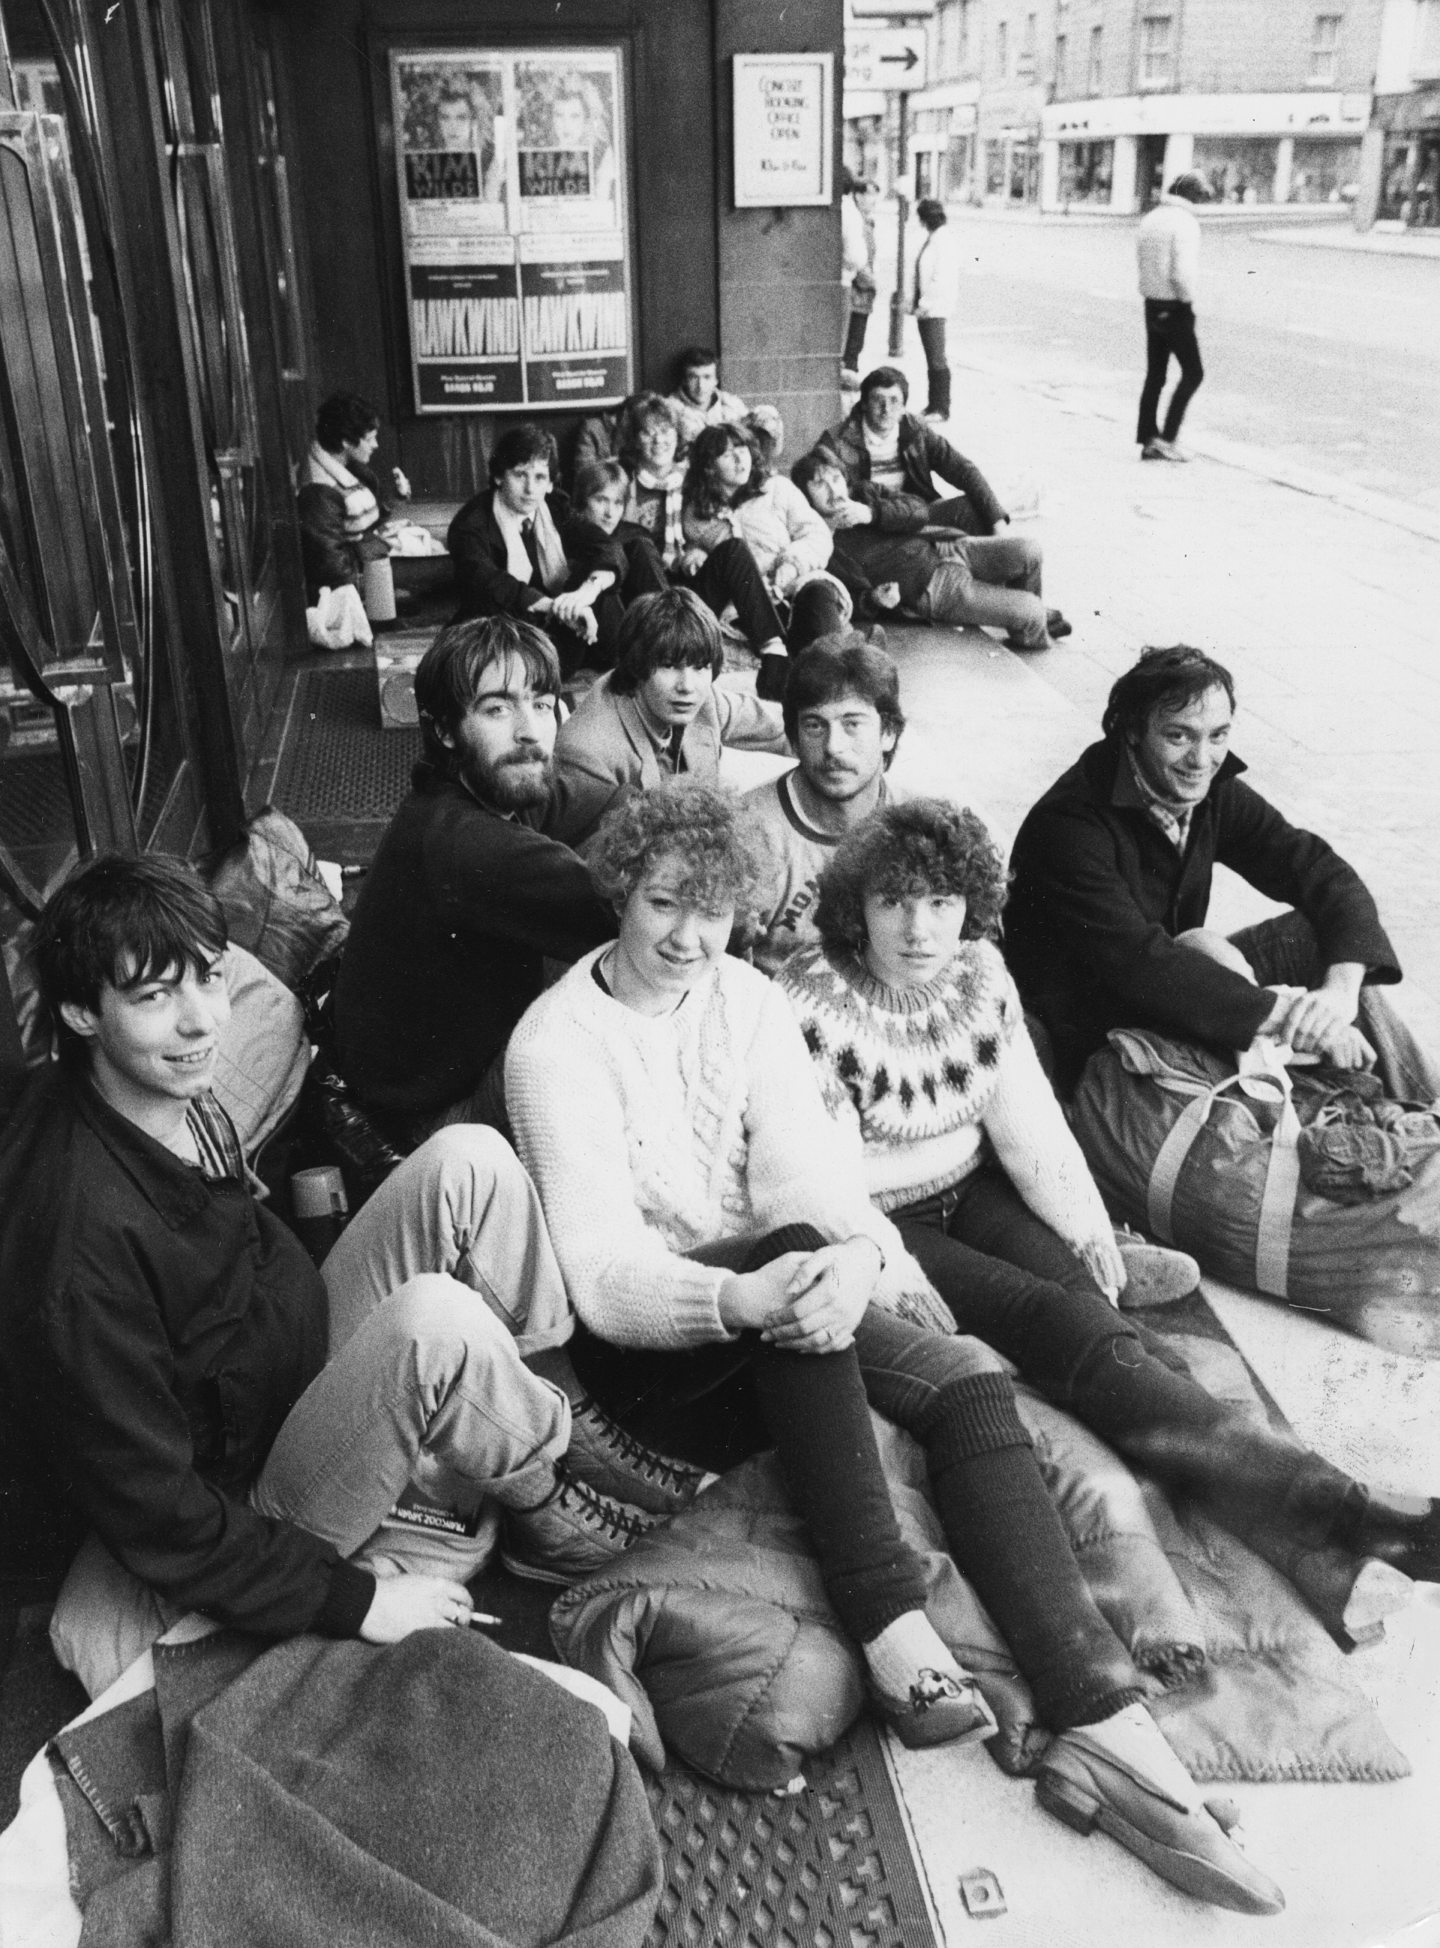 Duran Duran fans in the ticket queue back in 1982.